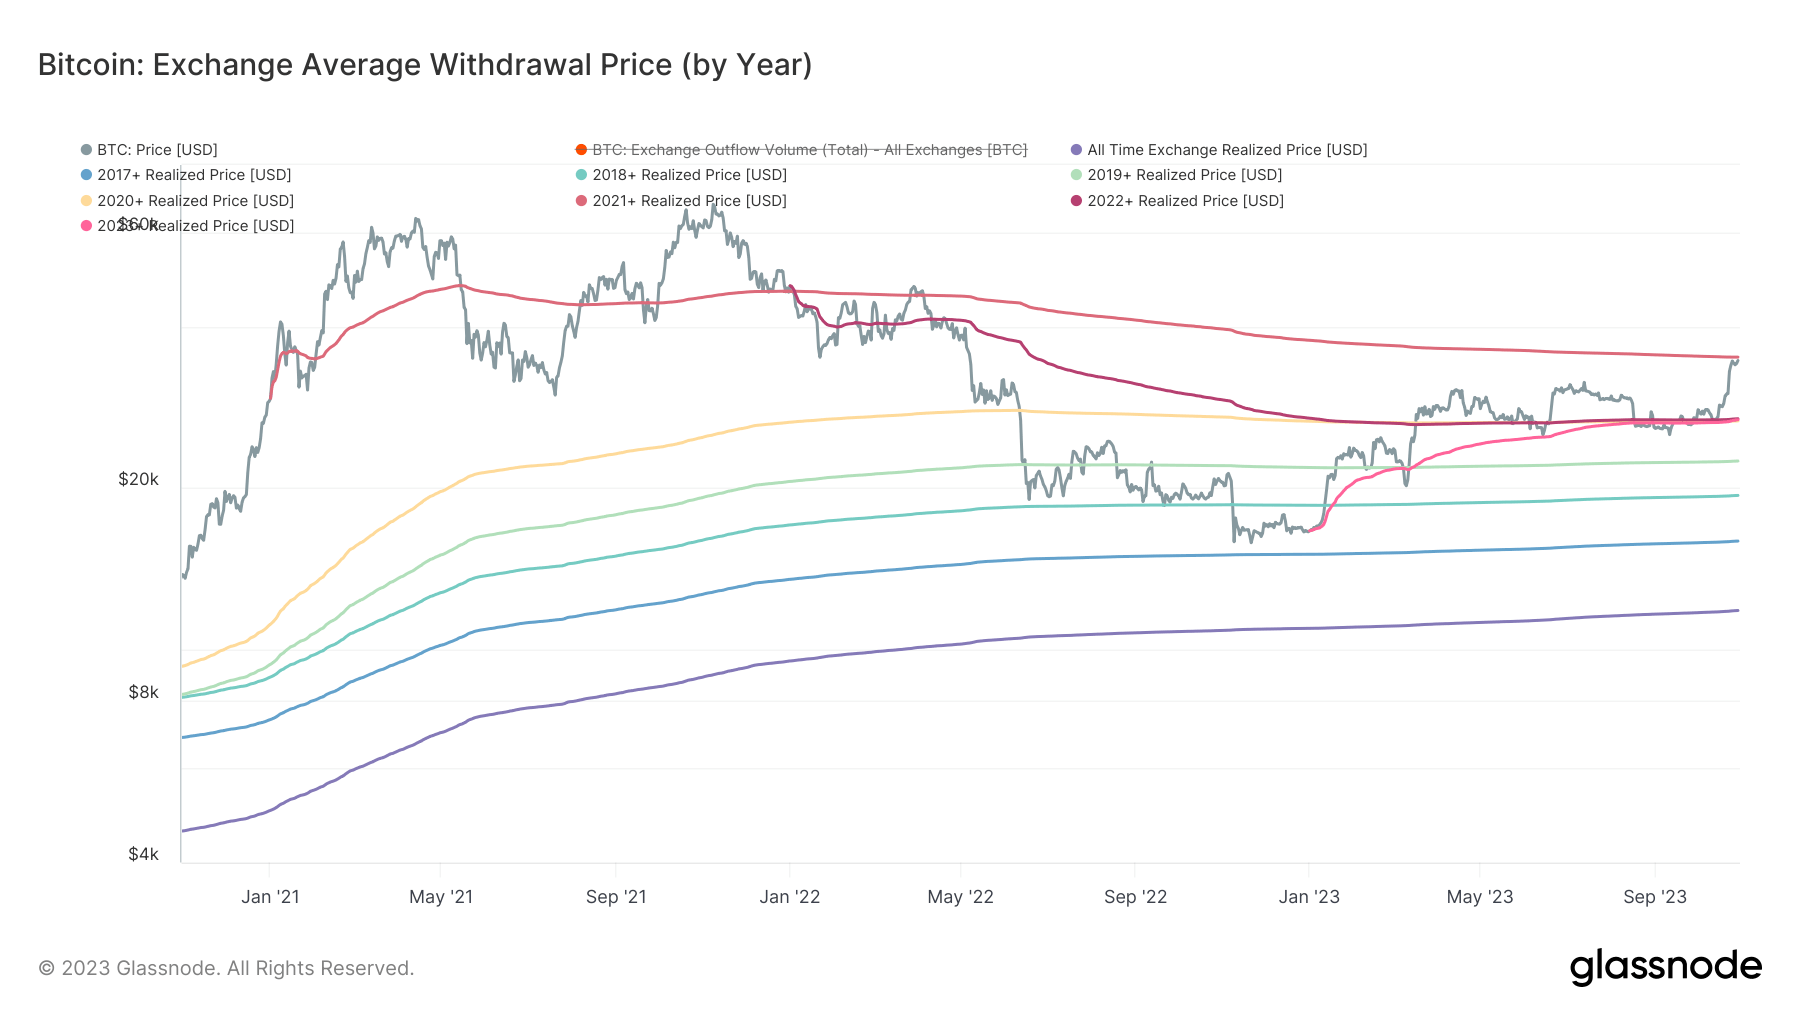 Exchange Average Withdrawal Price: (Source: Glassnode)